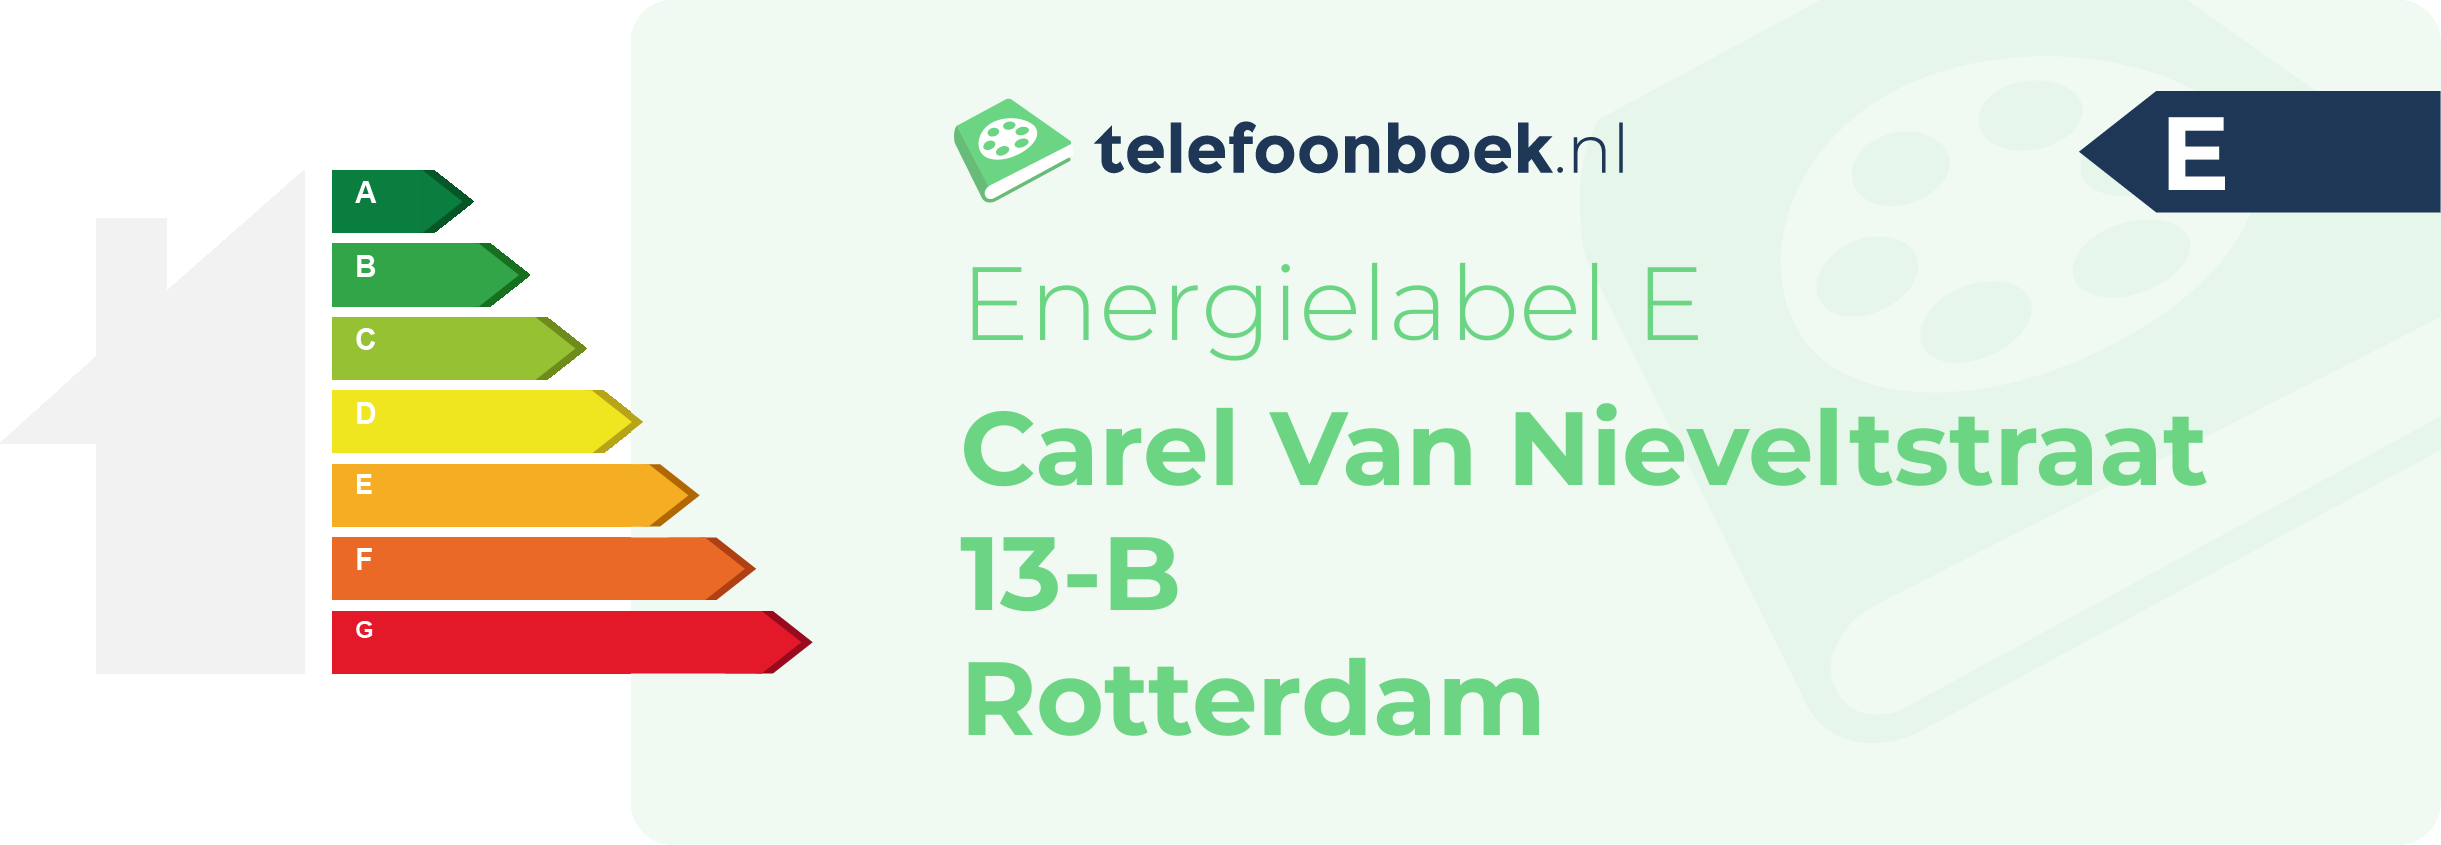 Energielabel Carel Van Nieveltstraat 13-B Rotterdam